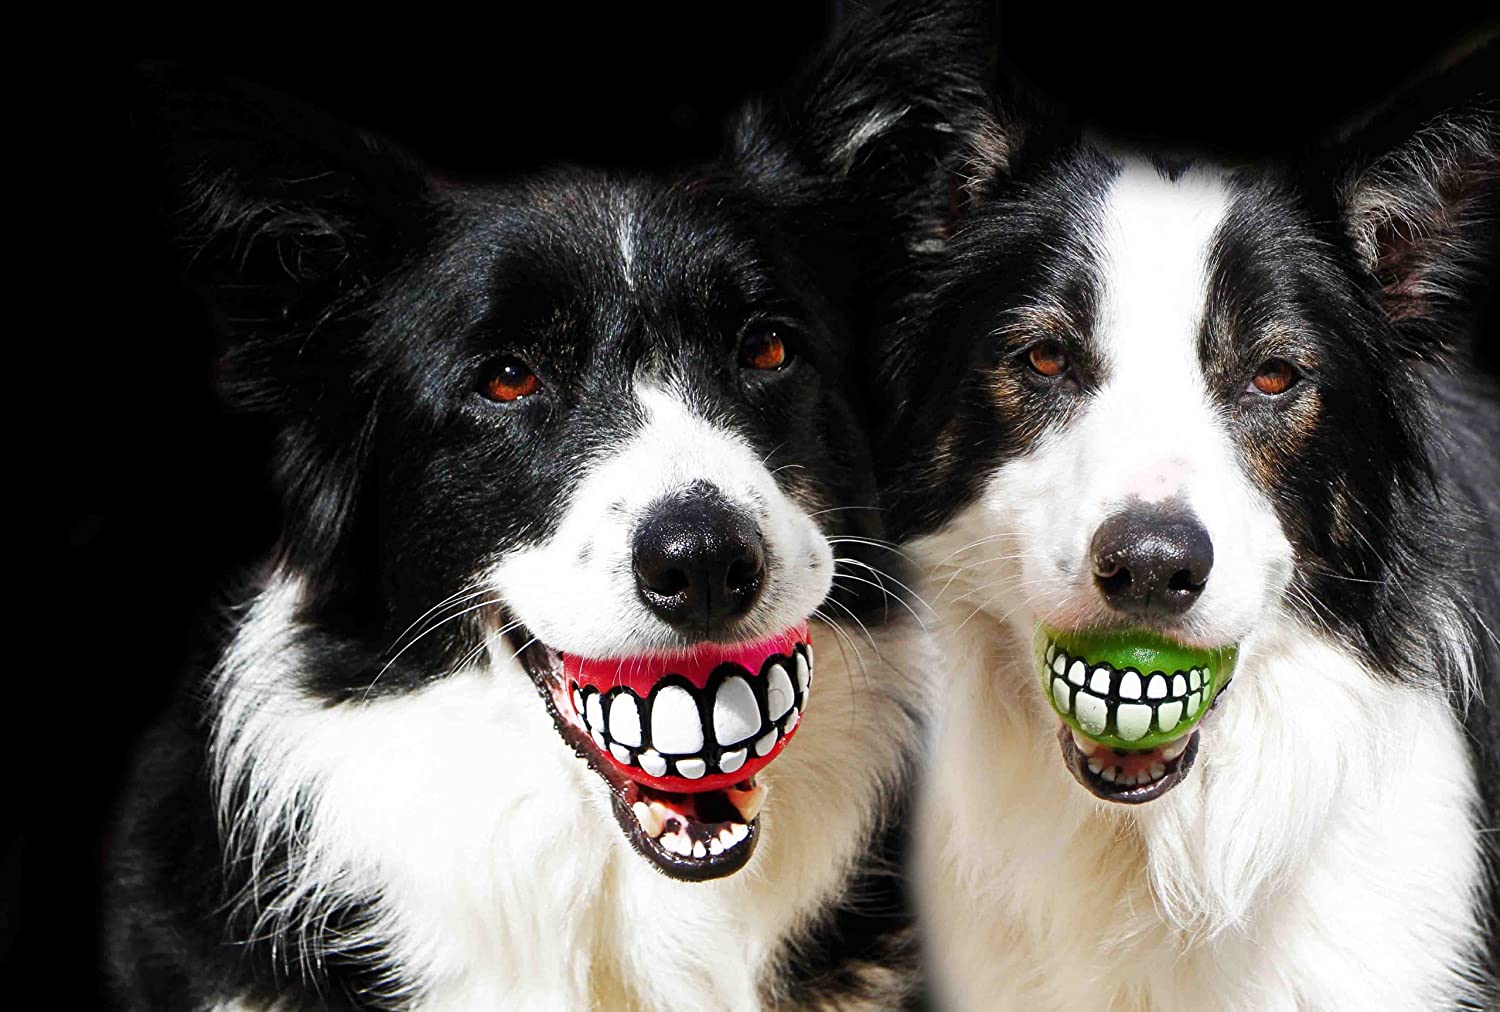 Funny dog ball teeth - Dog Ball Gives Your Dog Human Teeth